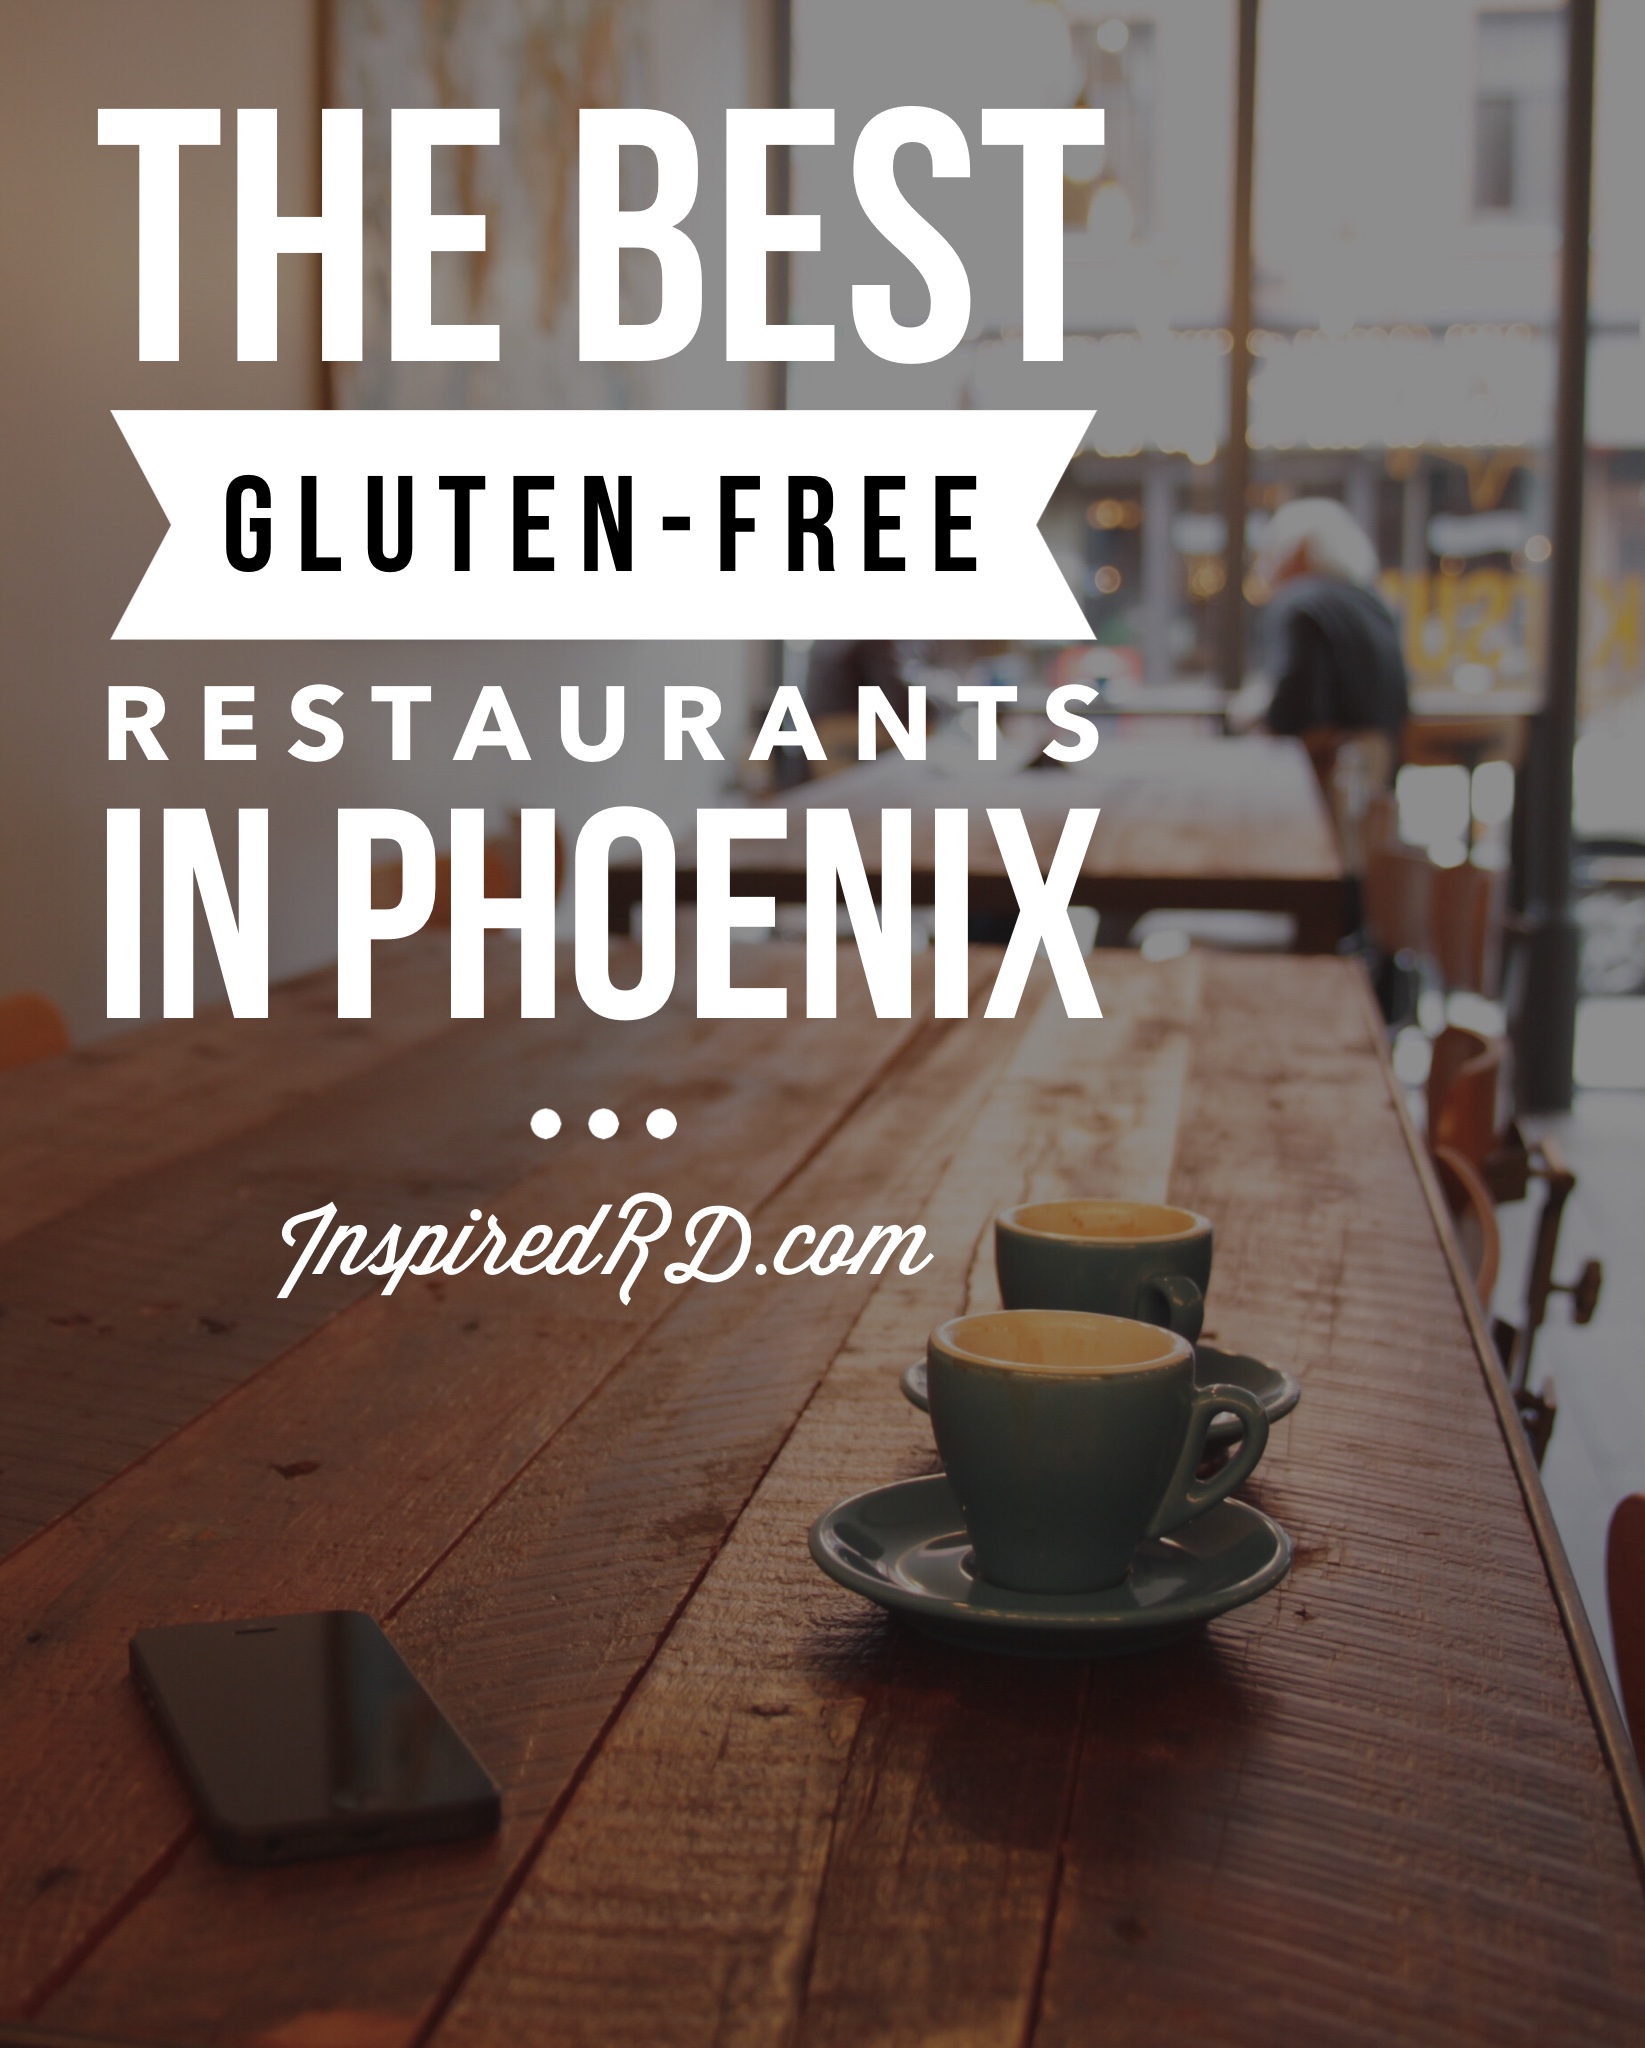 The best gluten-free restaurants in Phoenix (according to me) - Inspired RD